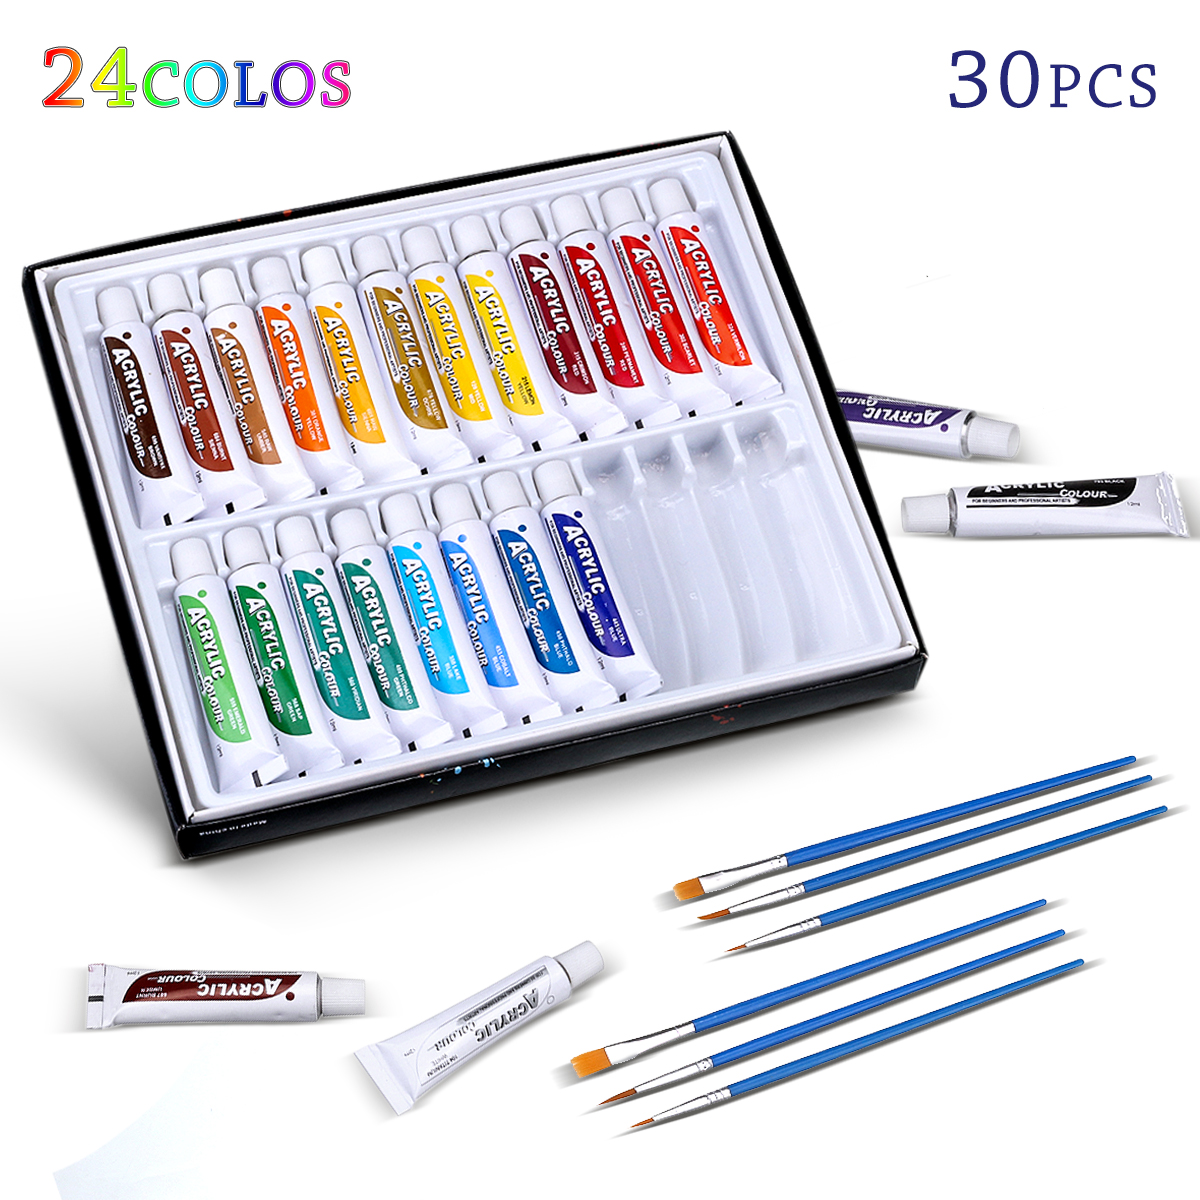 24-Colors-Watercolor-Painting-Set-24-Colors-6-Free-Brushes-Set-Acrylic-Paint-Pigments-Professional-A-1633281-1